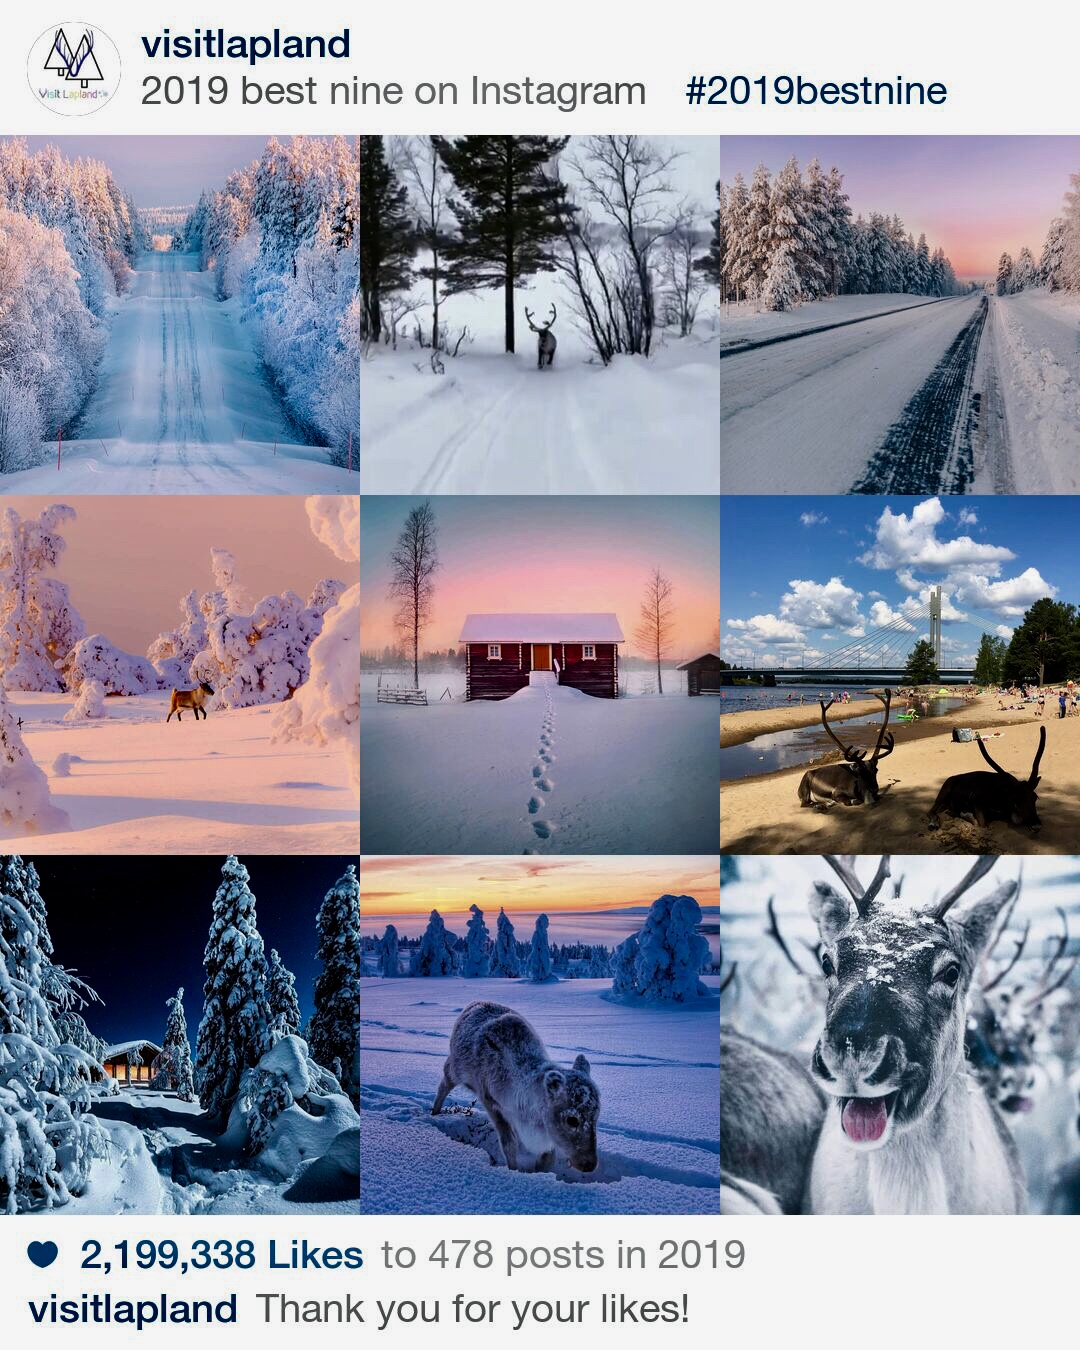 Instagram best nine of Visit Lapland profile - travel sites ranking Finland in Instagram 